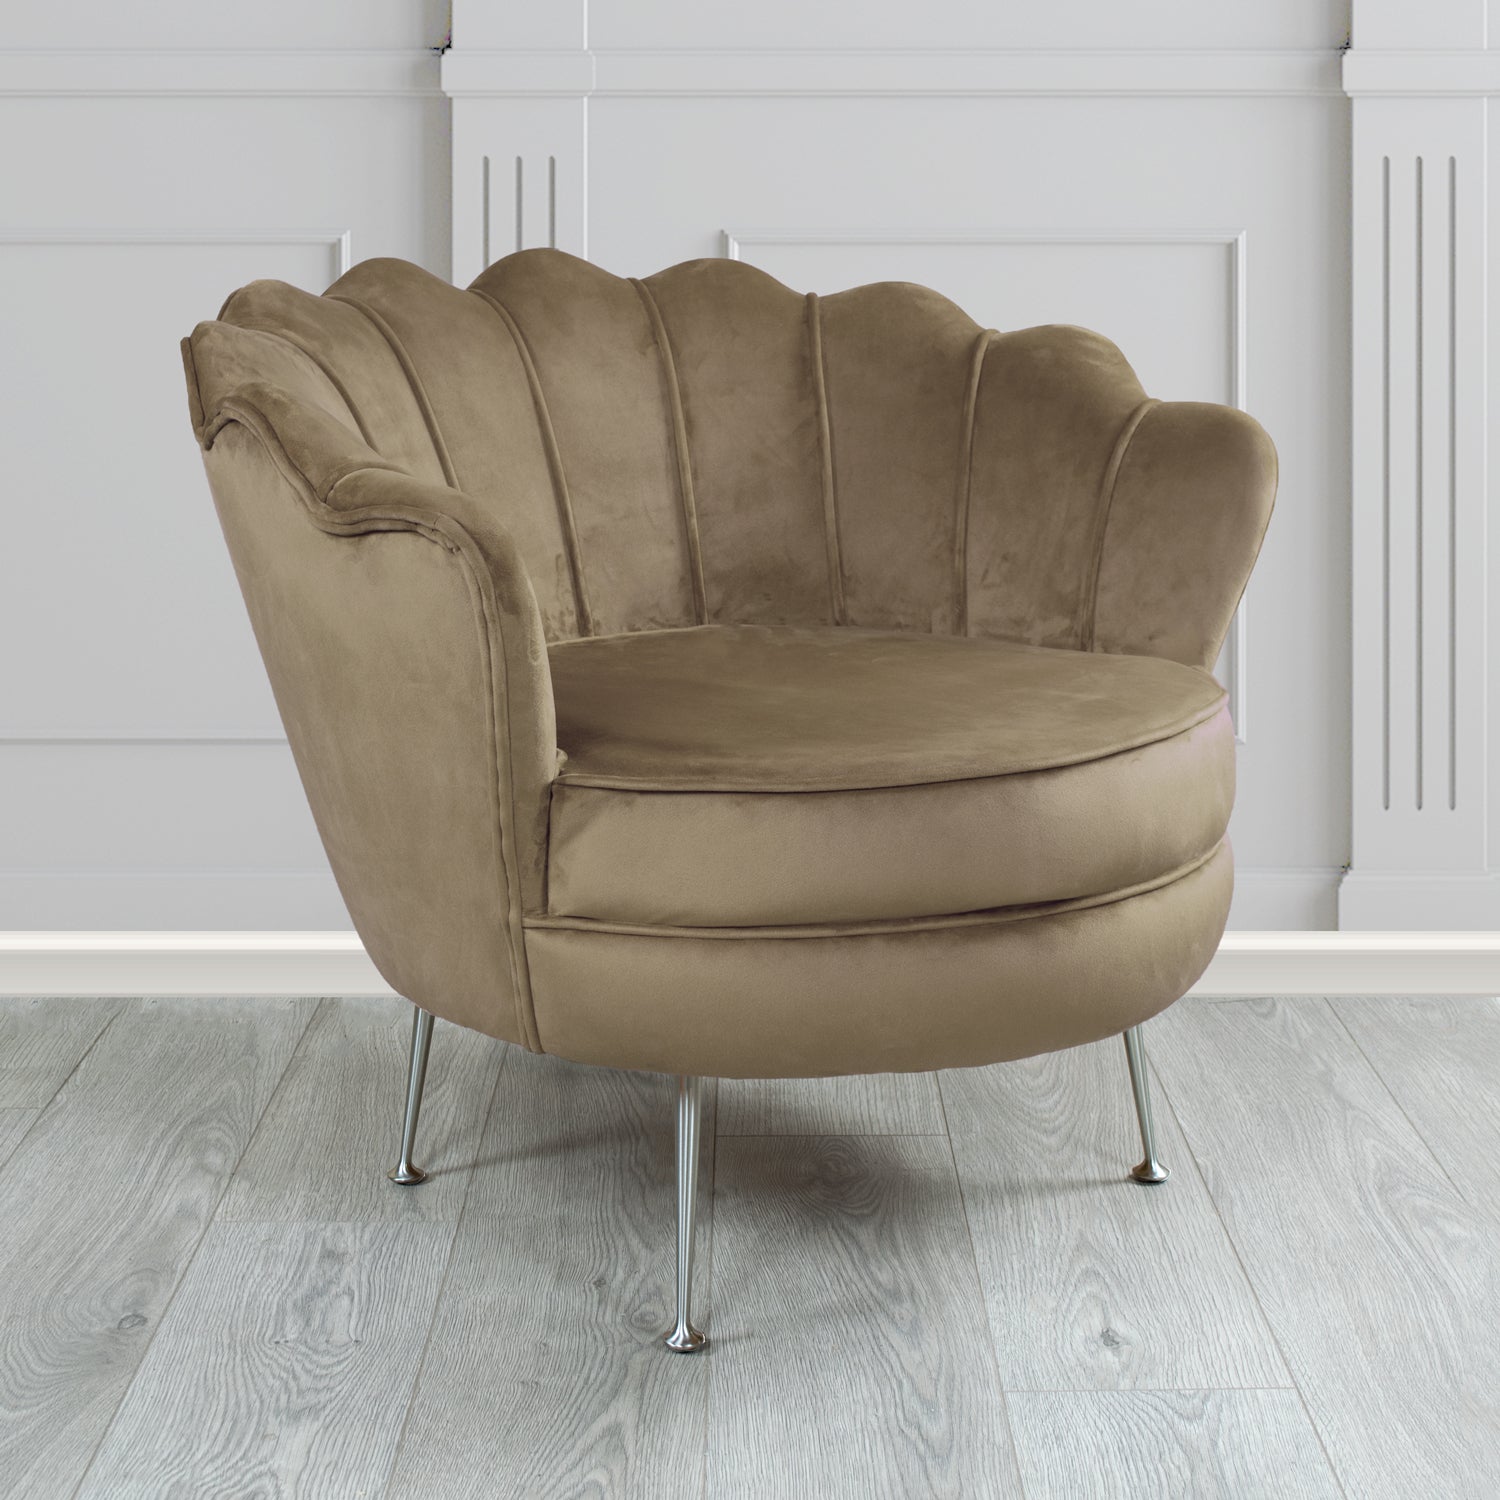 Olivia Monaco Biscuit Plain Velvet Fabric Shell Chair - The Tub Chair Shop